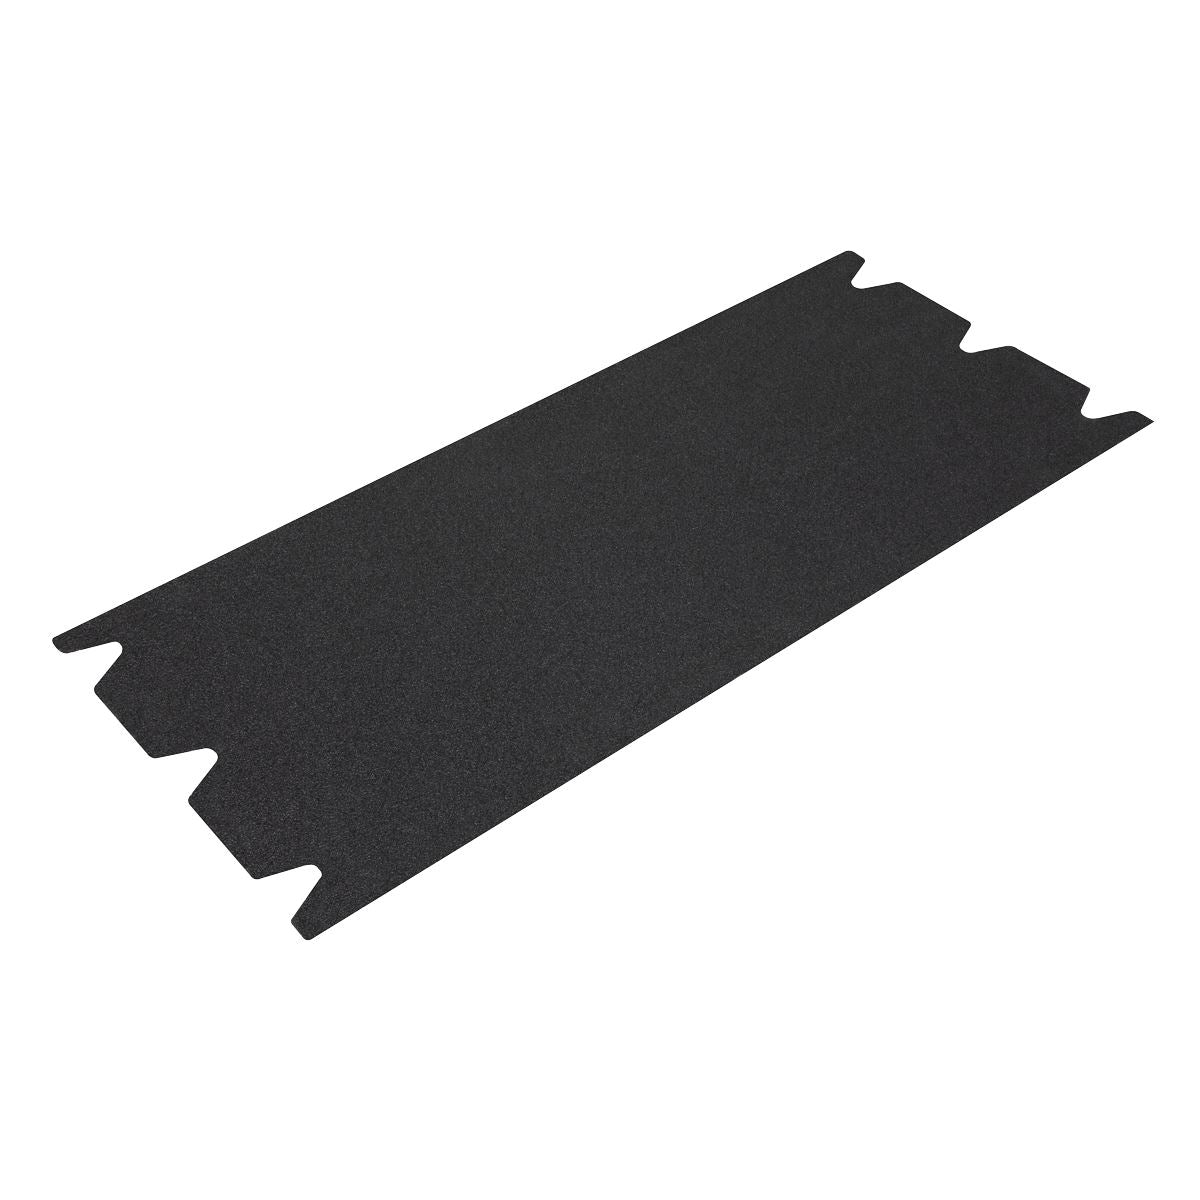 Sealey Floor Sanding Sheet 205 x 470mm 100Grit - Pack of 25